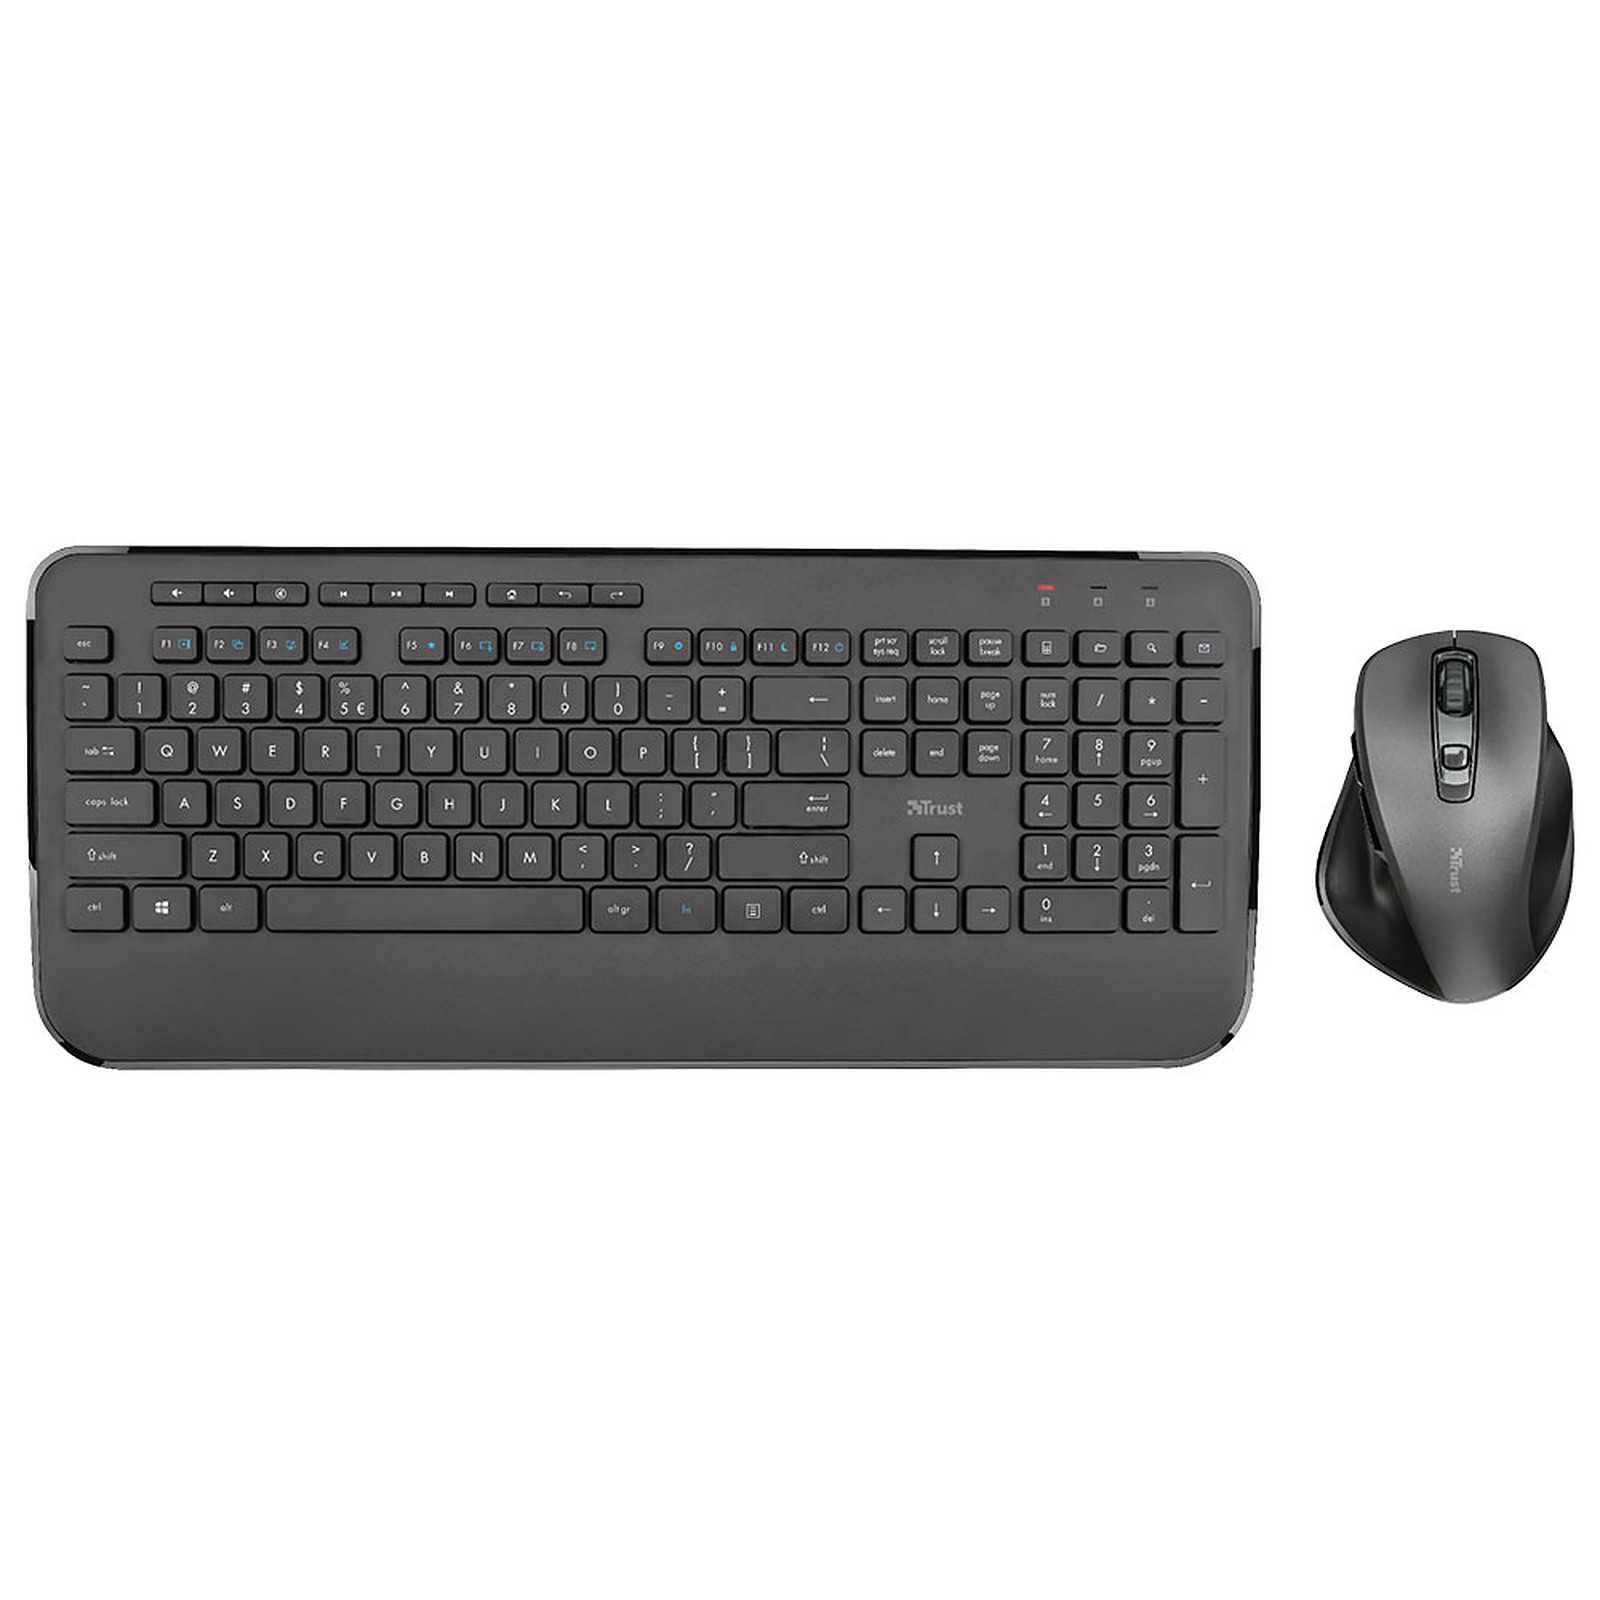 Trust nola wireless keyboard black usb - купить , скидки, цена, отзывы, обзор, характеристики - комплекты клавиатур и мышей